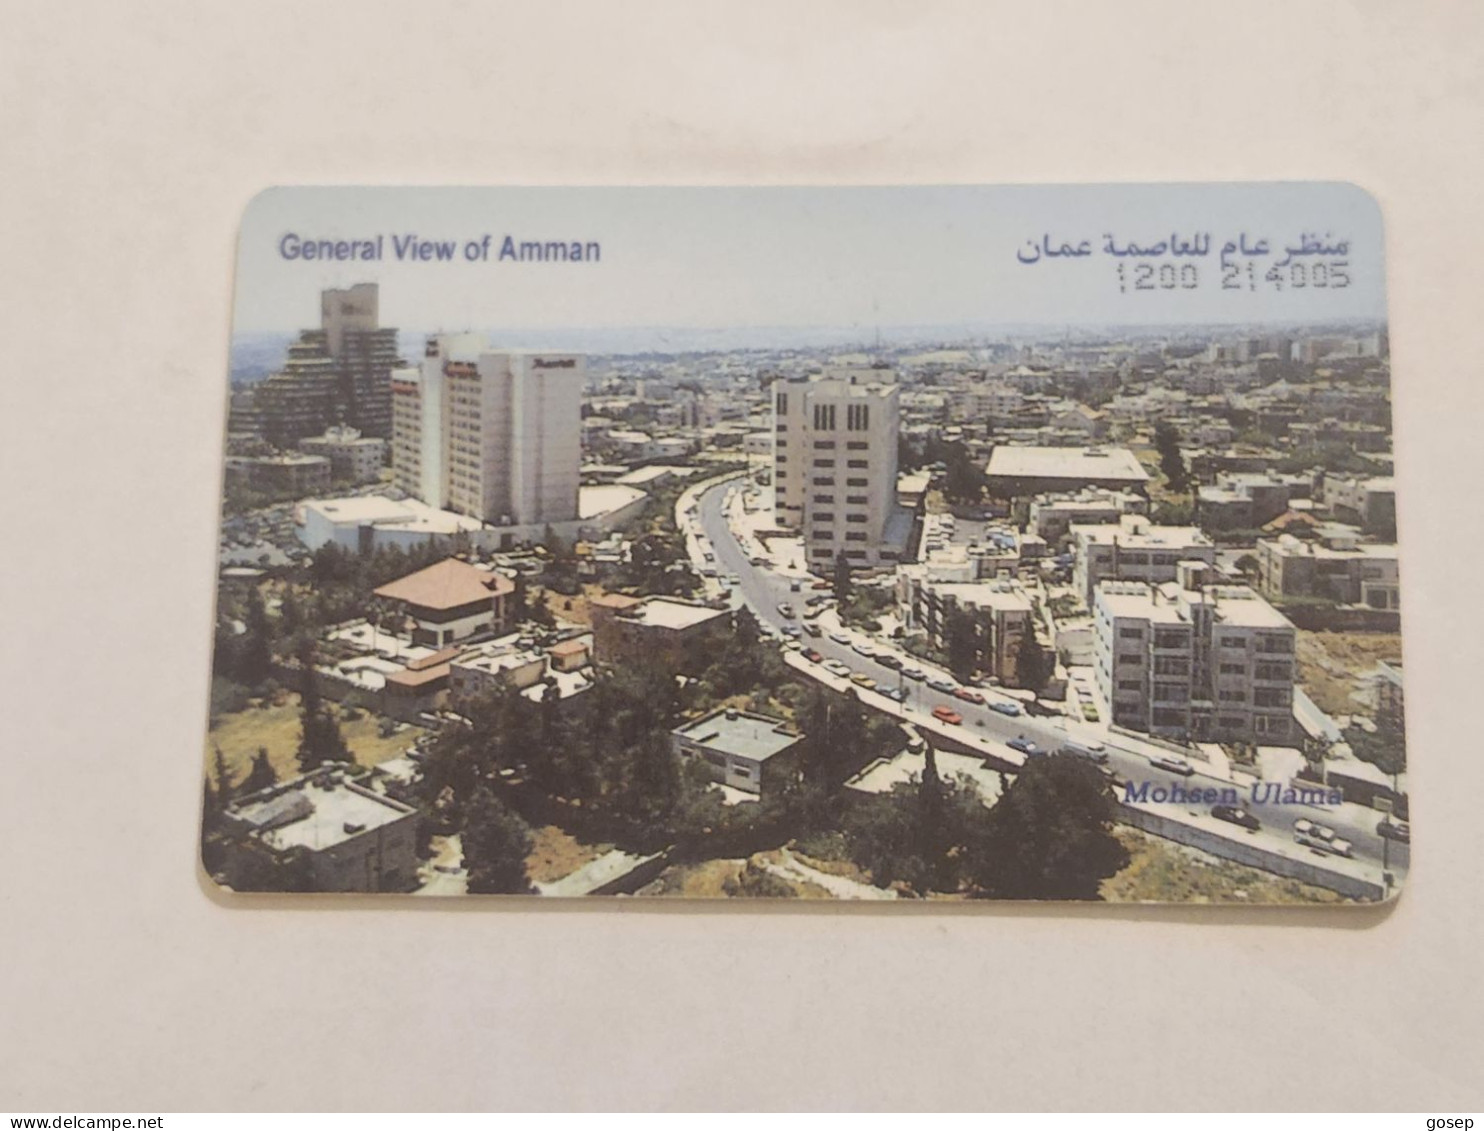 JORDAN-(JO-ALO-0028)-King Abdullah Mosque-(125)-(1200-214005)-(15JD)-(9/2000)-used Card+1card Prepiad Free - Jordan